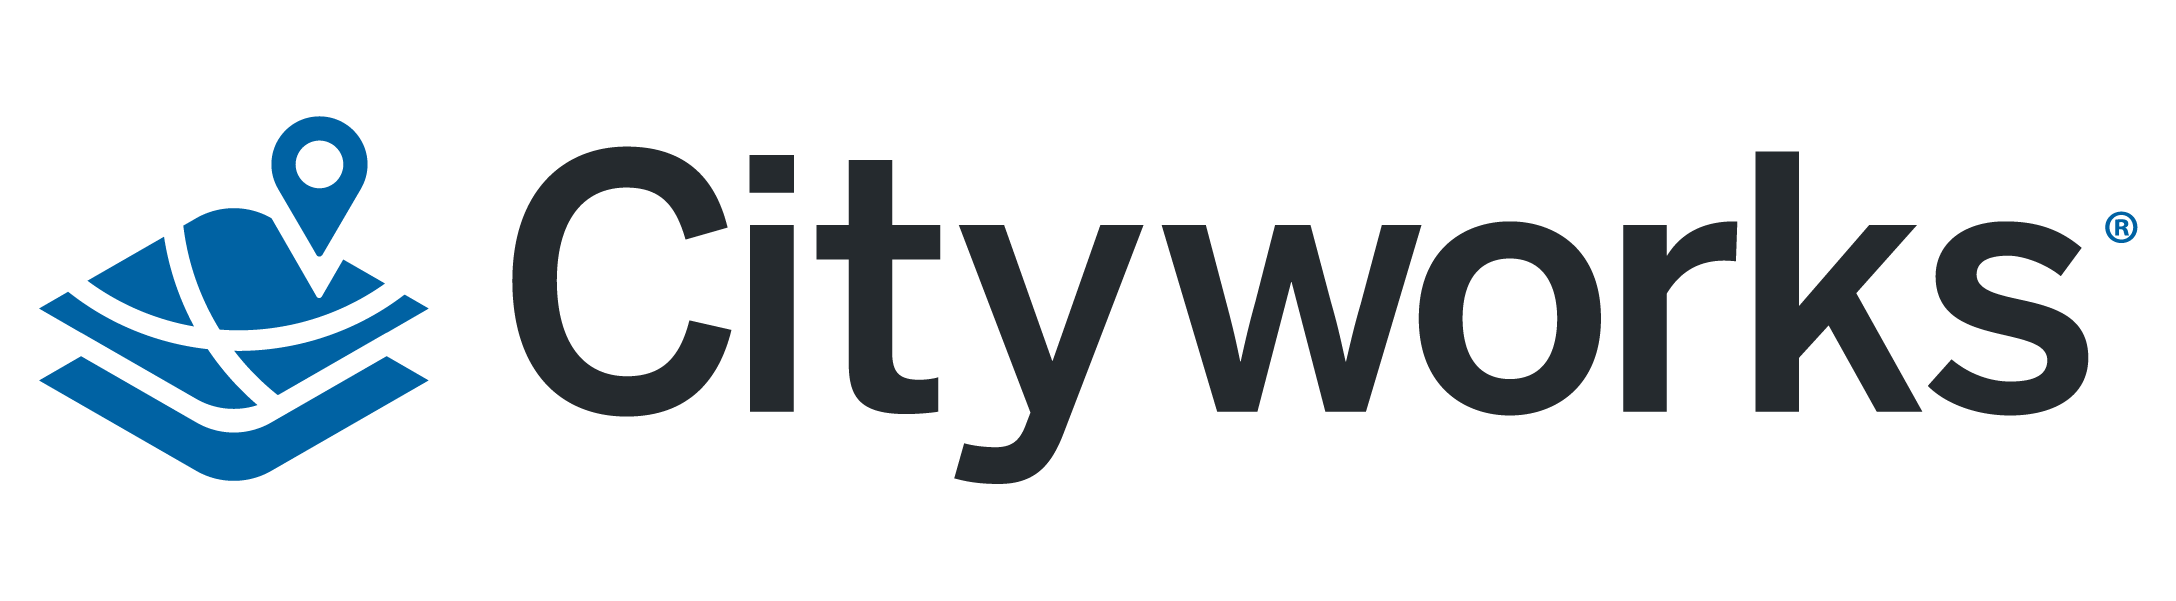 Cityworks Logo 